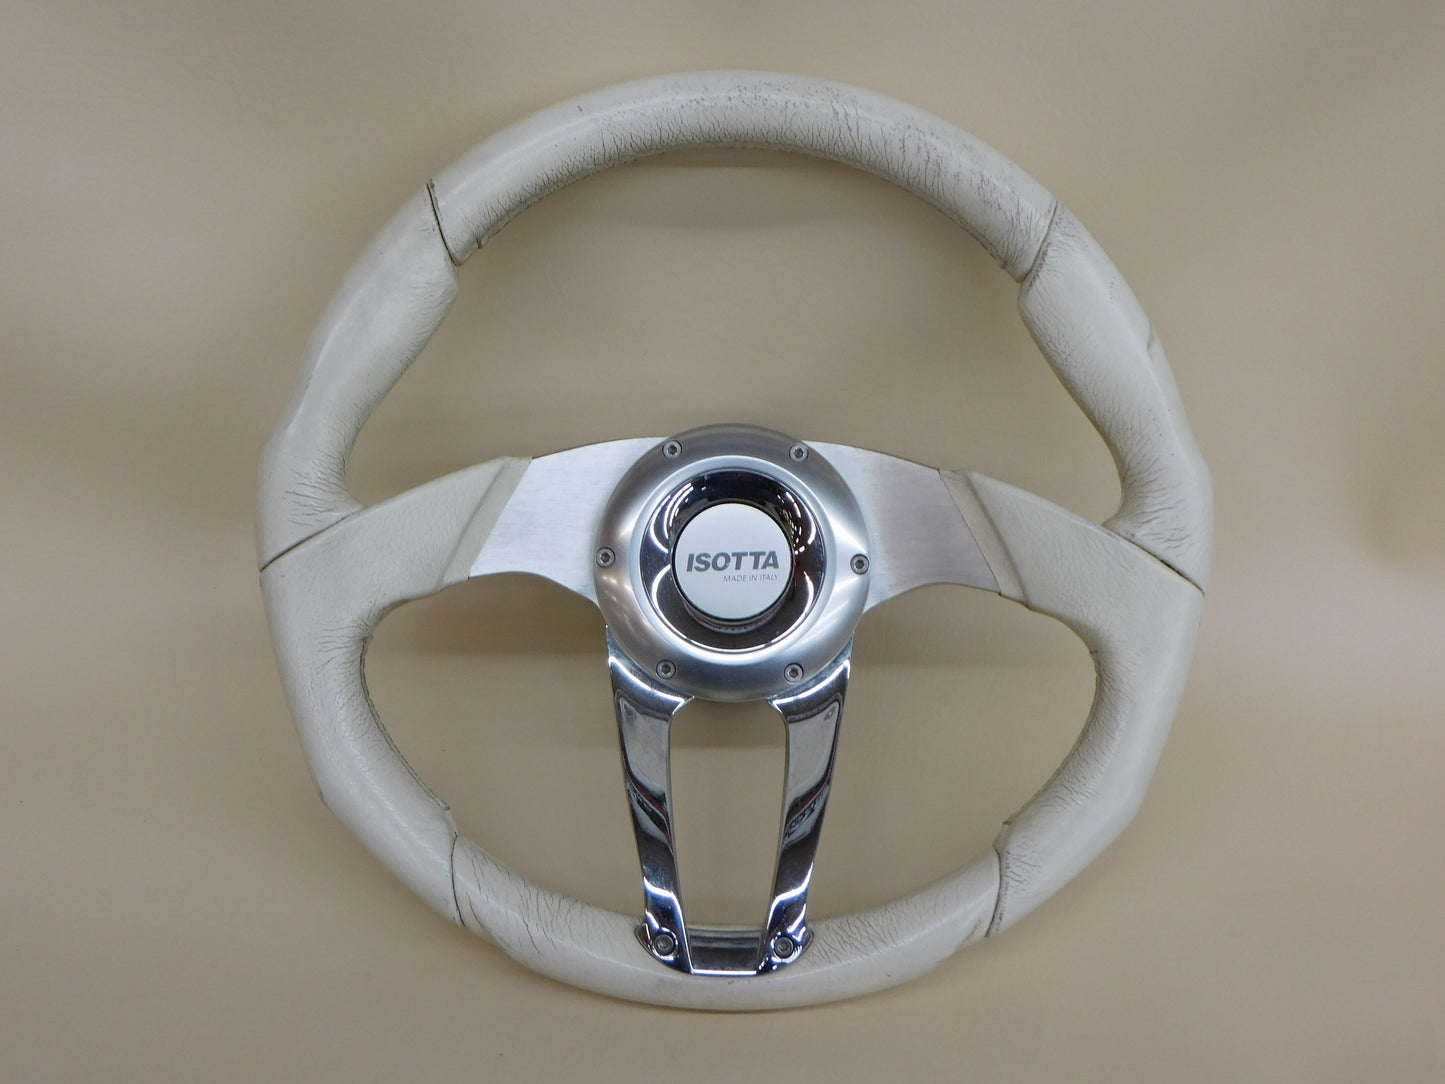 Isotta Steering Wheel